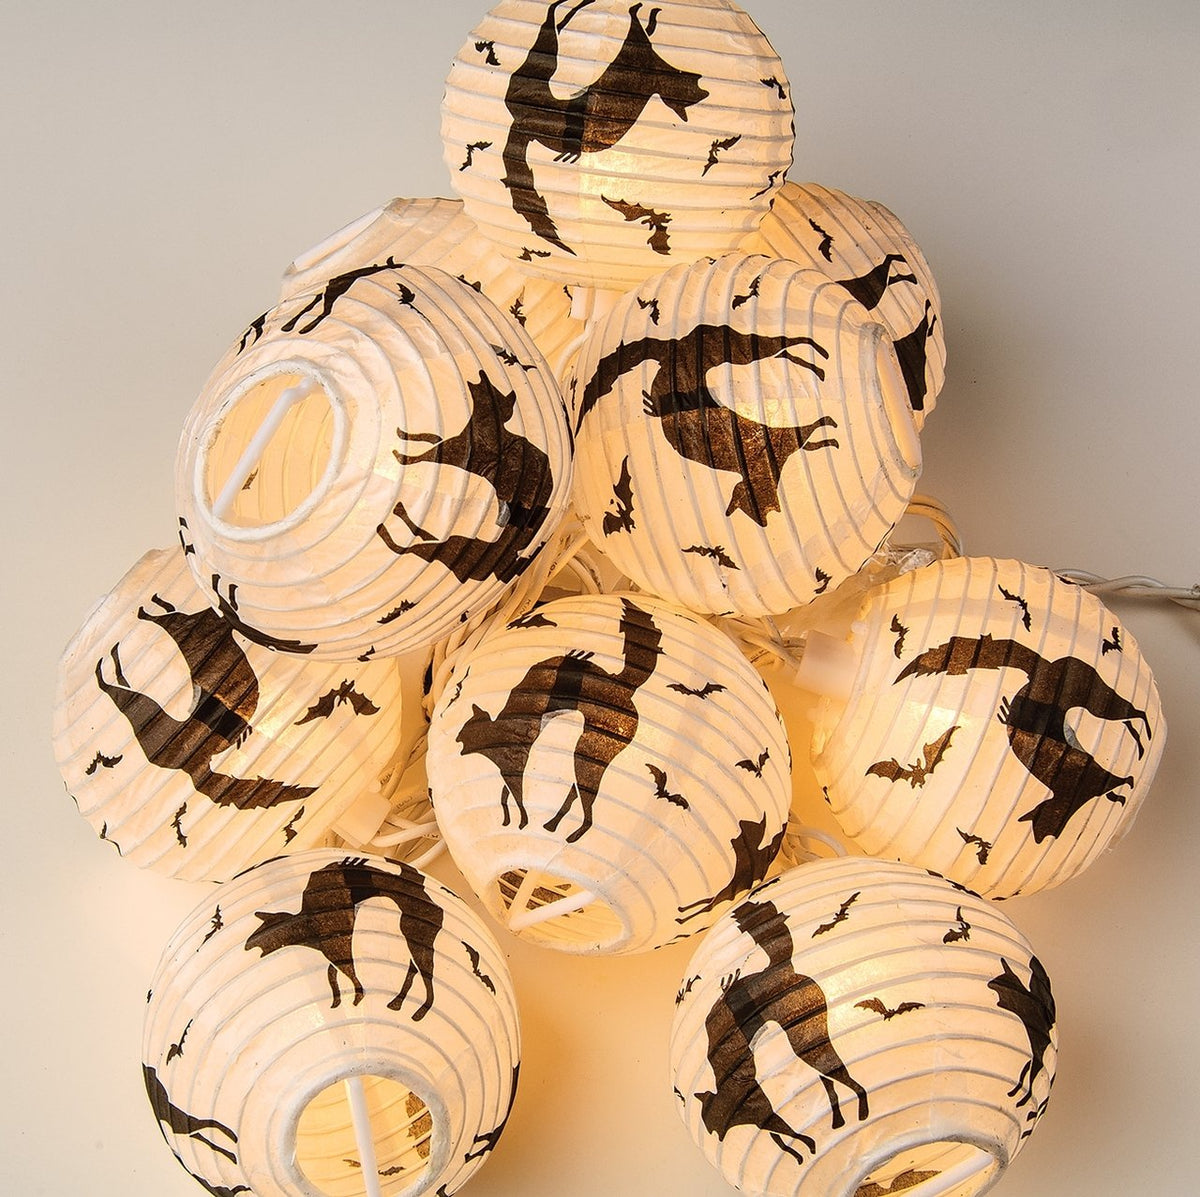 Bats and Cats Paper Lantern String Lights - PaperLanternStore.com - Paper Lanterns, Decor, Party Lights &amp; More